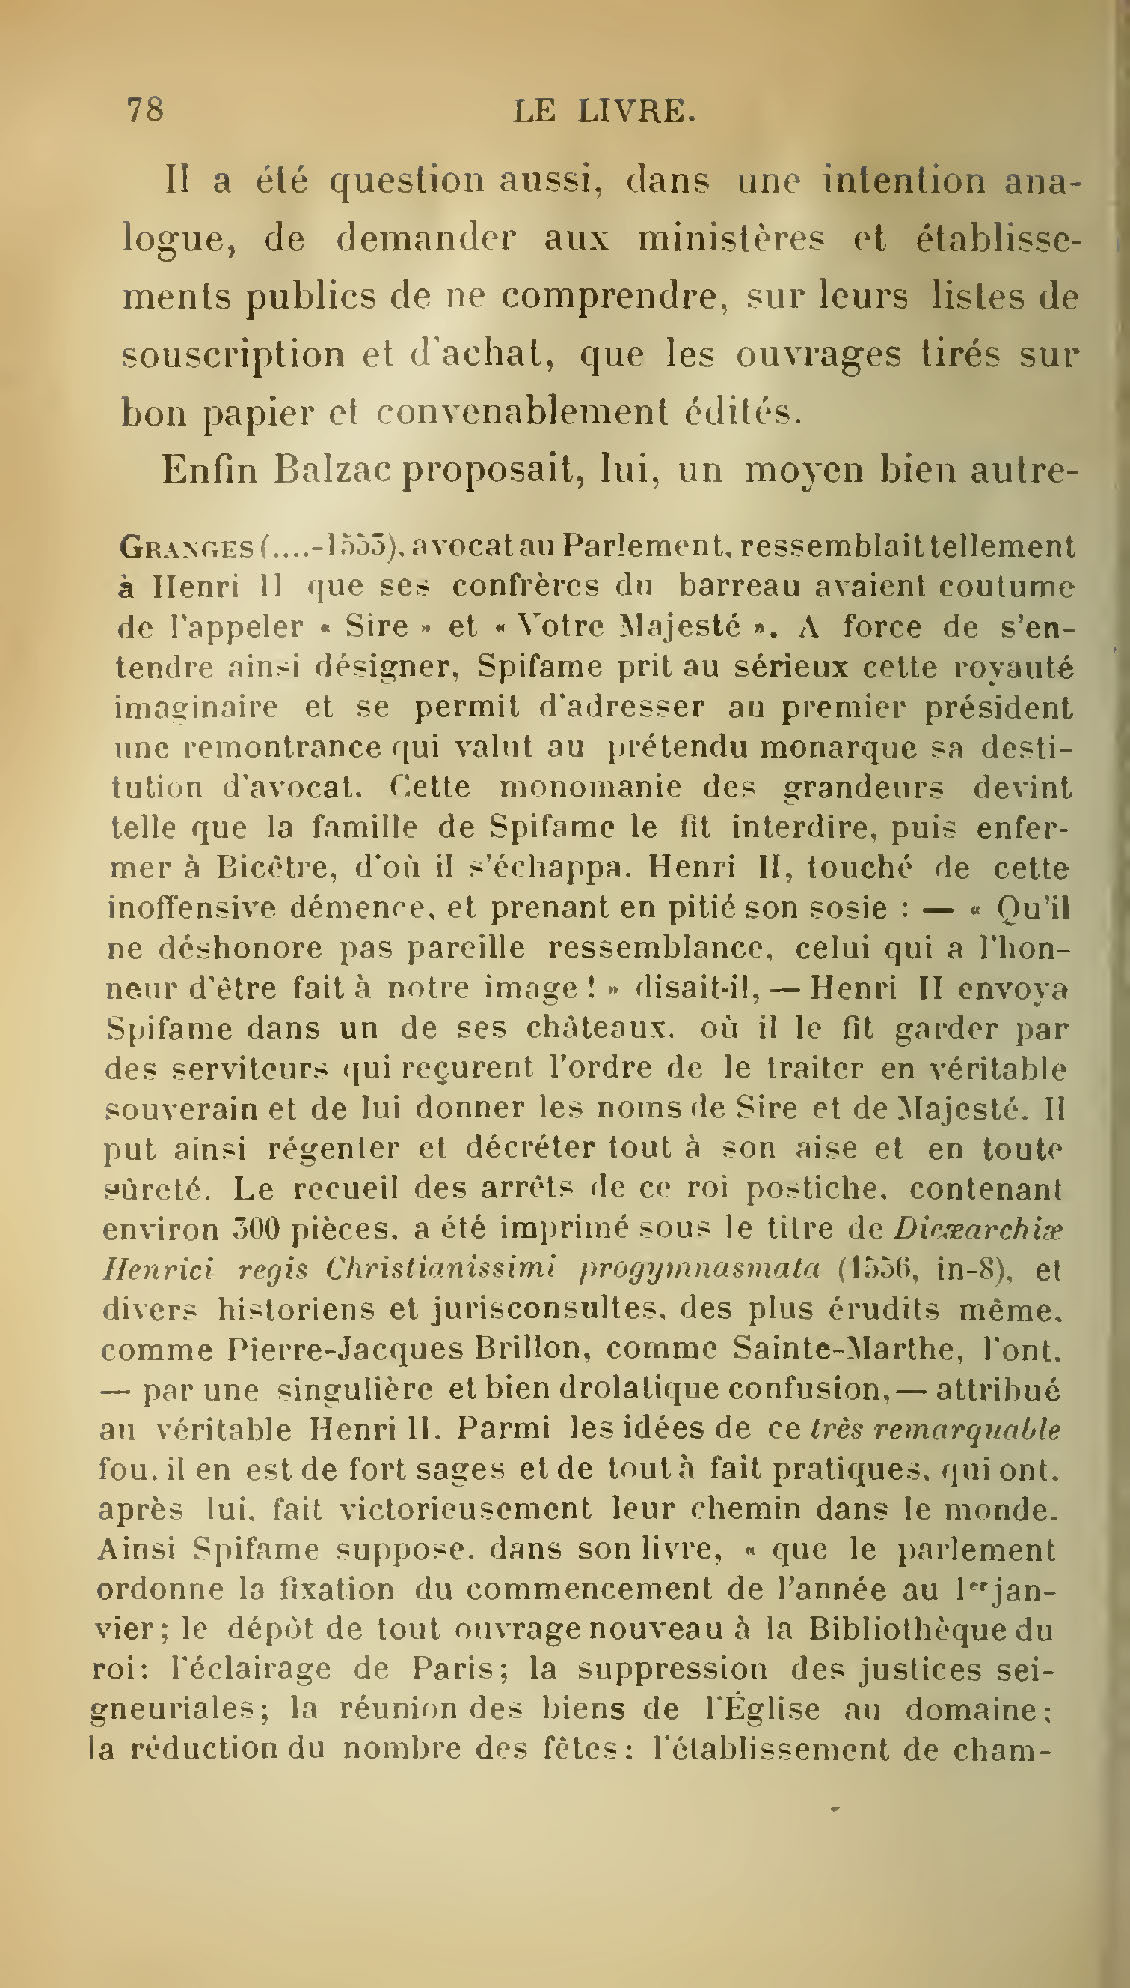 Albert Cim, Le Livre, t. III, p. 78.